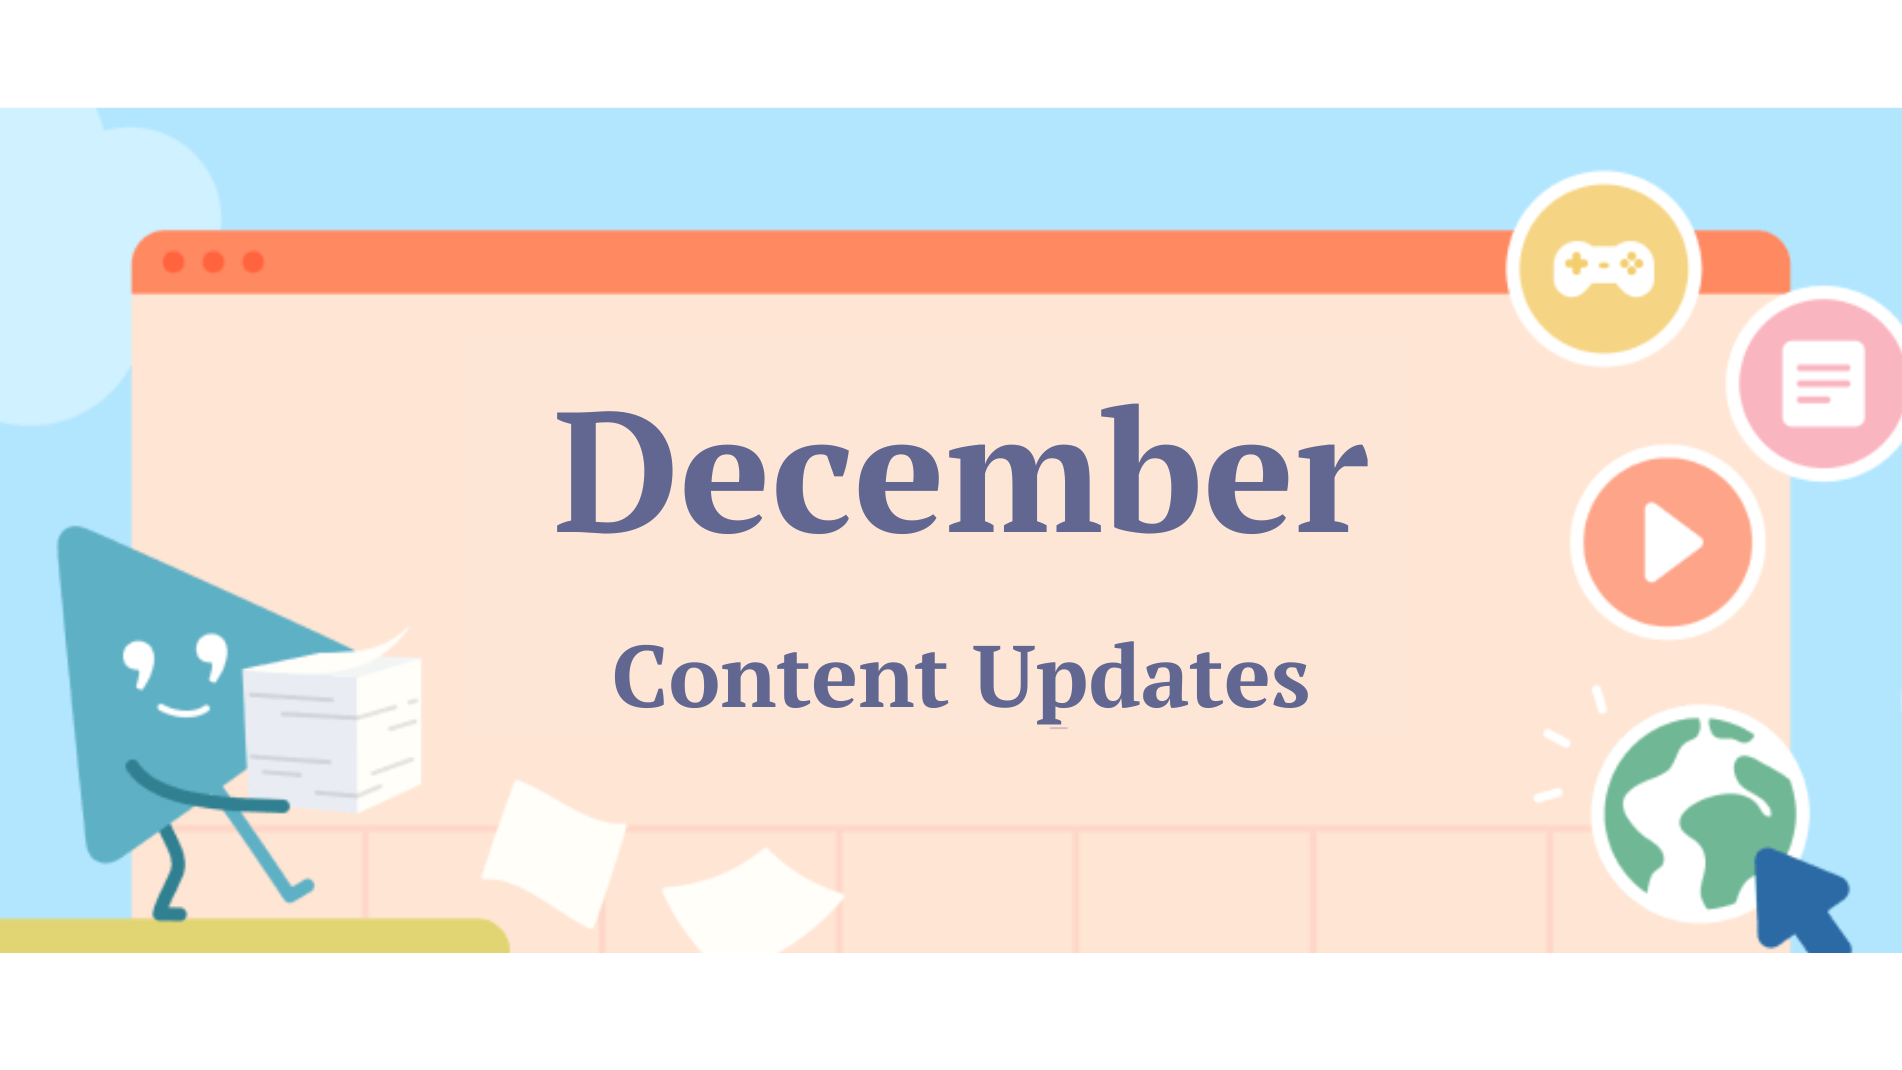 December Content Updates
